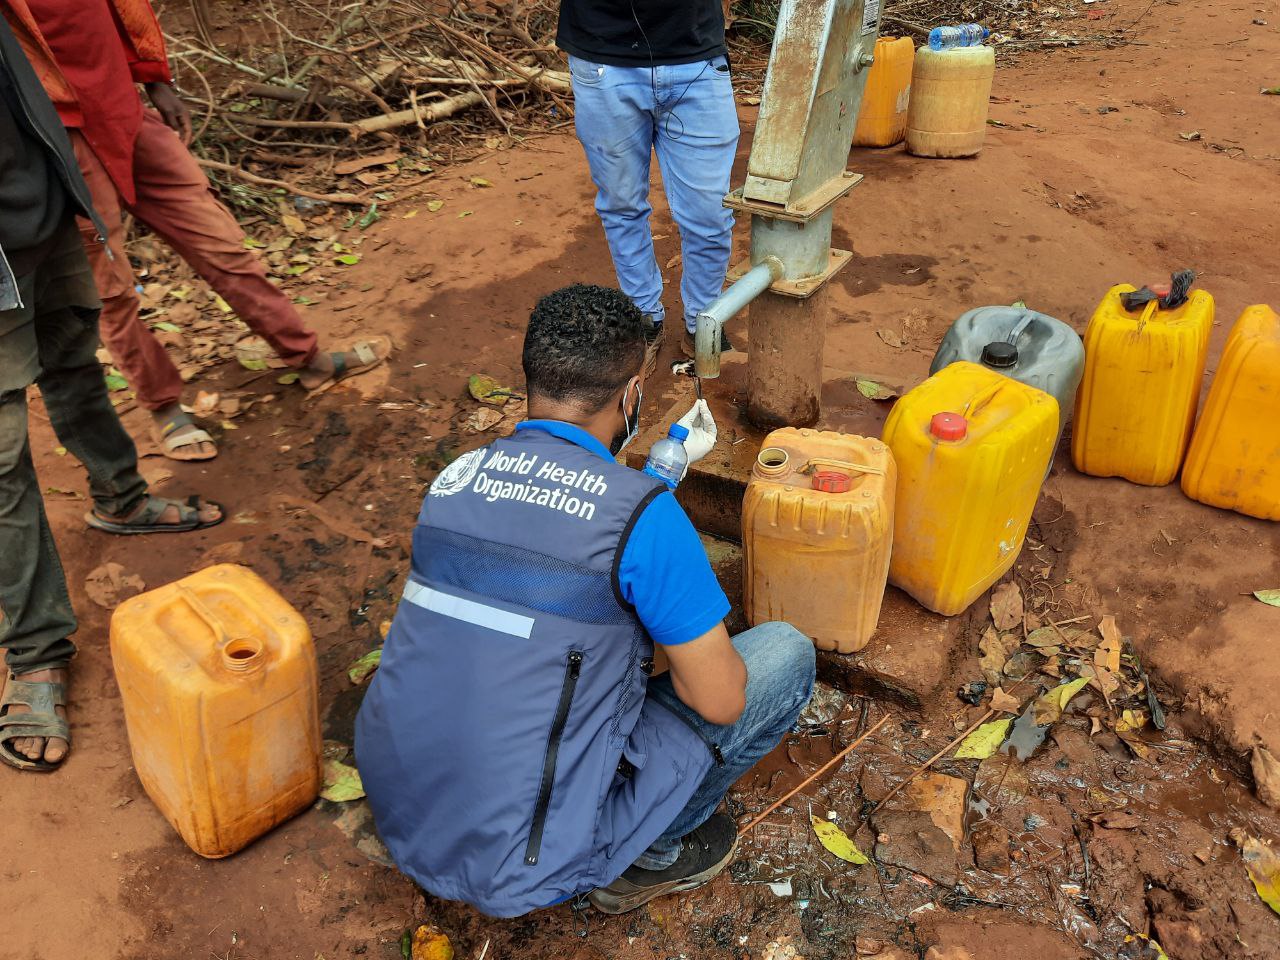 EU provides €1 million emergency aid for Ethiopia's cholera crisis